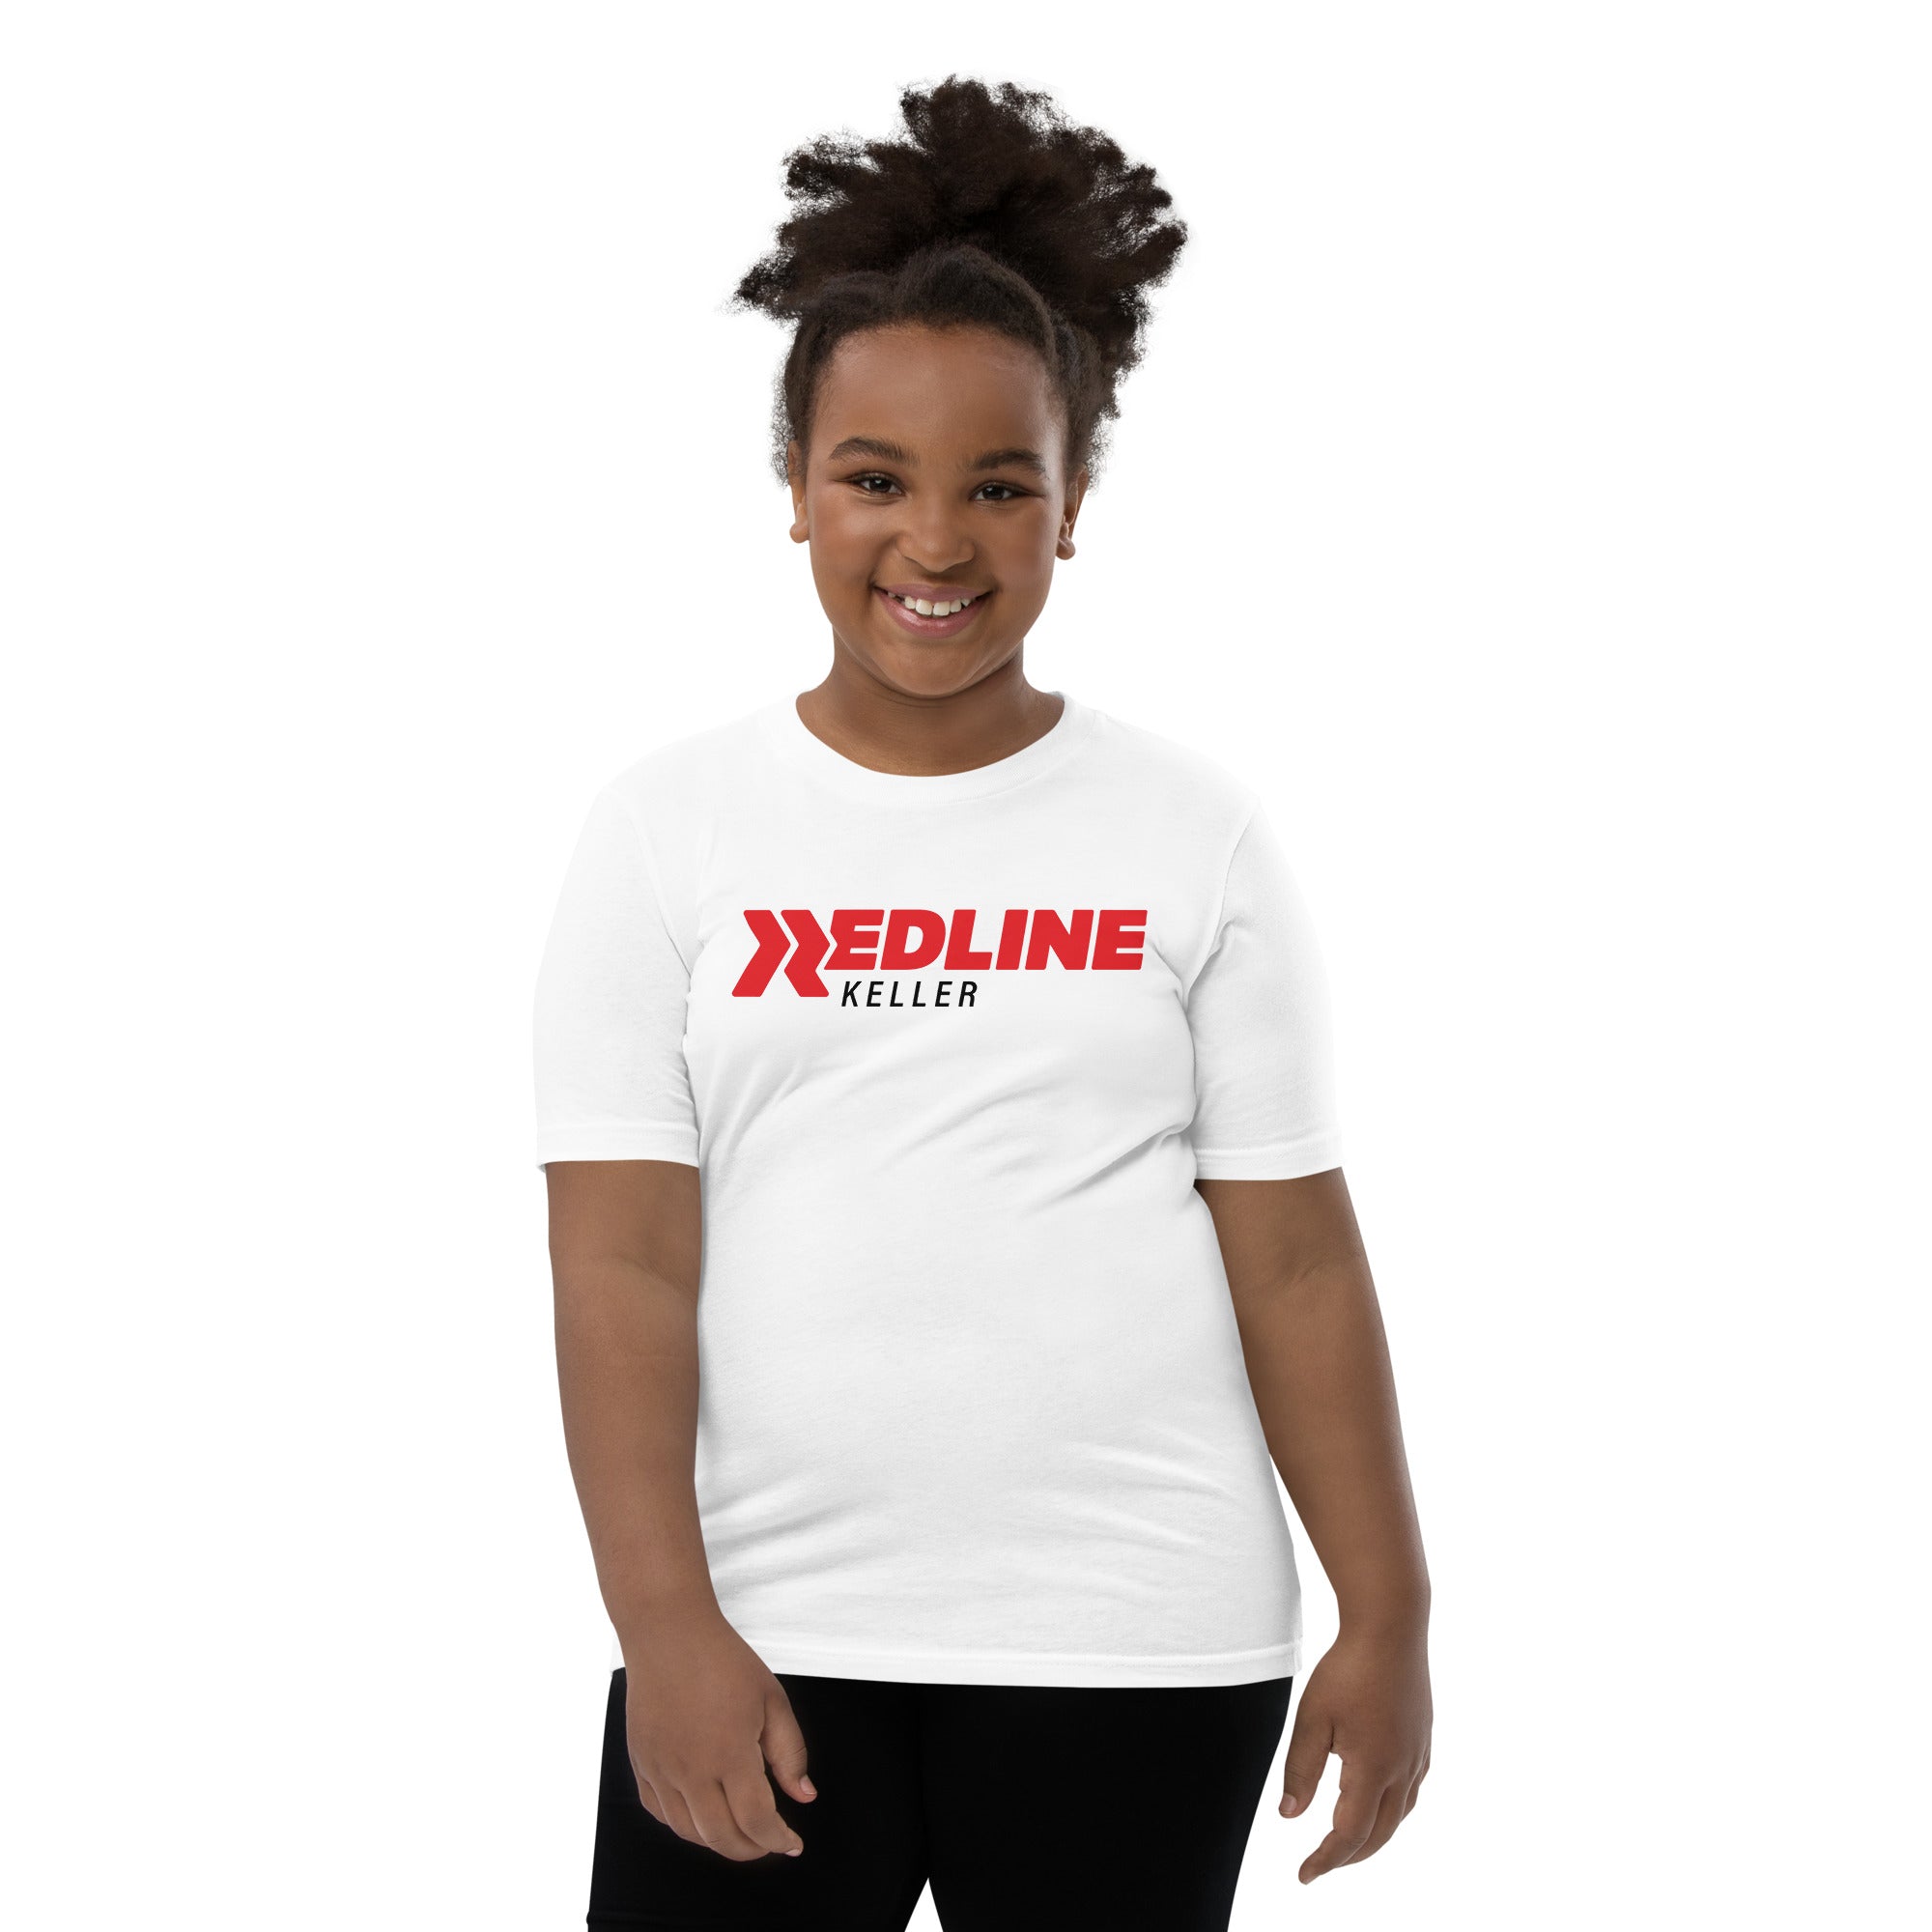 Keller Logo R/B - White Youth Short Sleeve T-Shirt